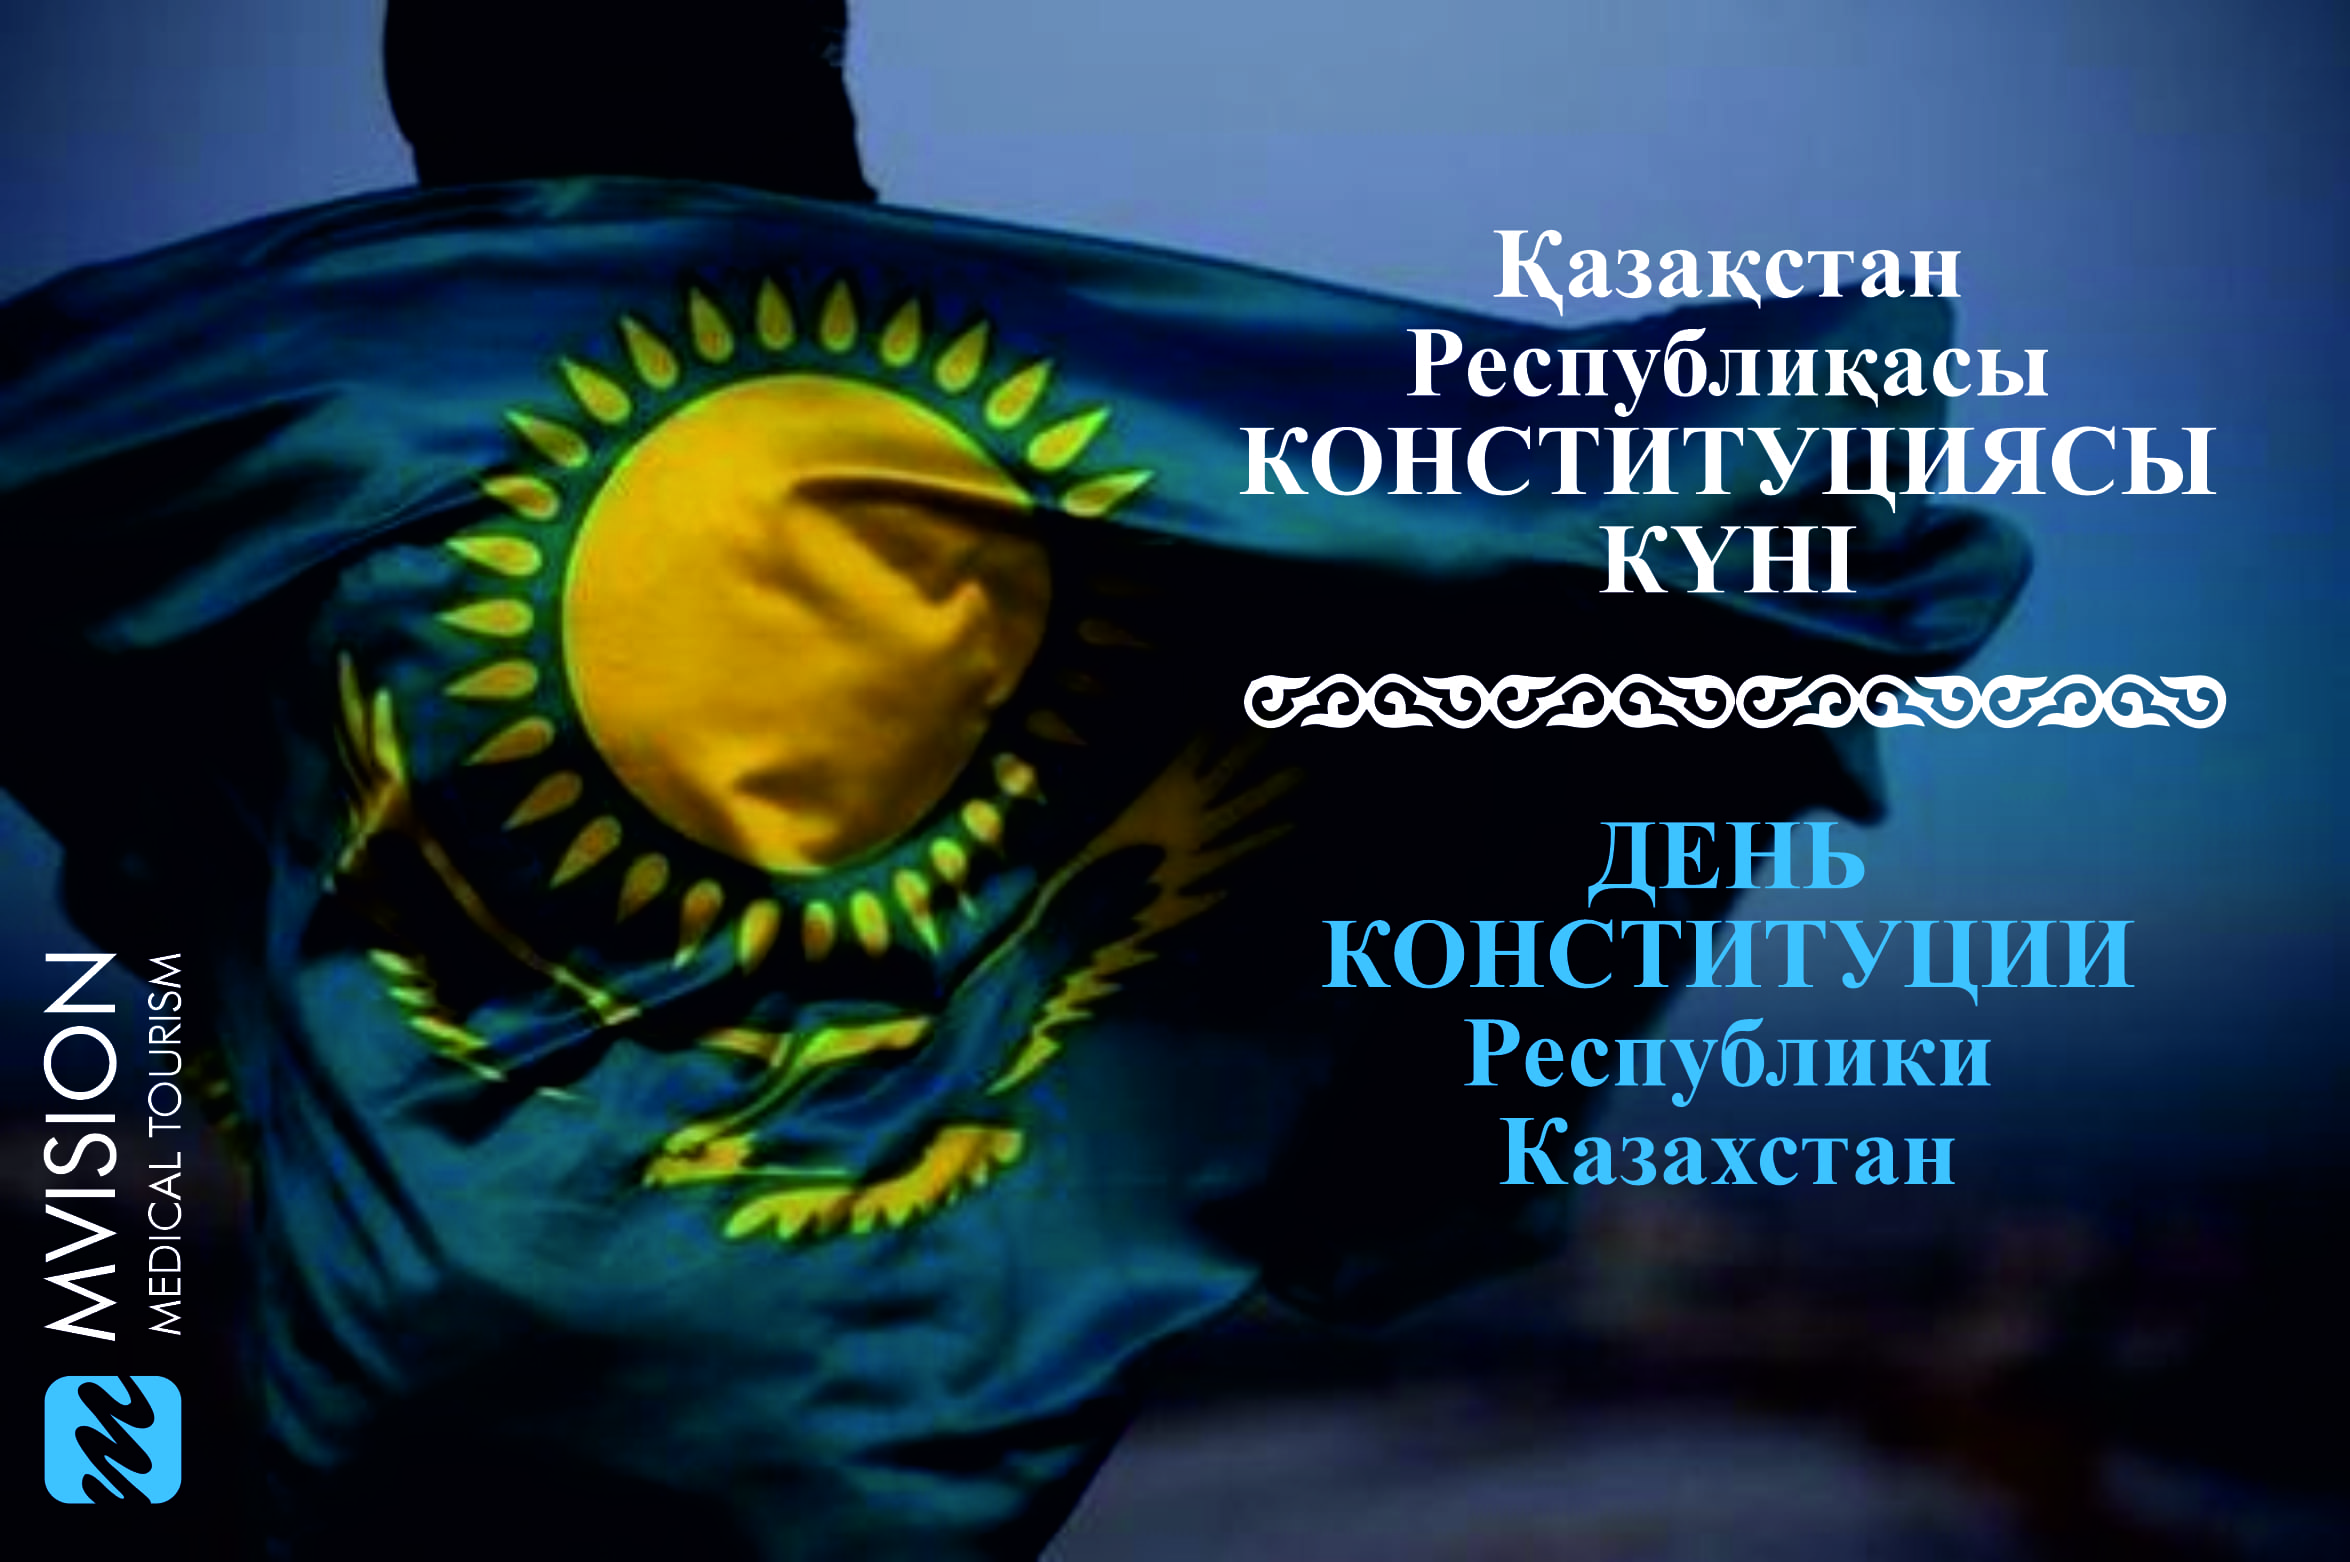 You are currently viewing C Днем Конституции Республики Казахстан!